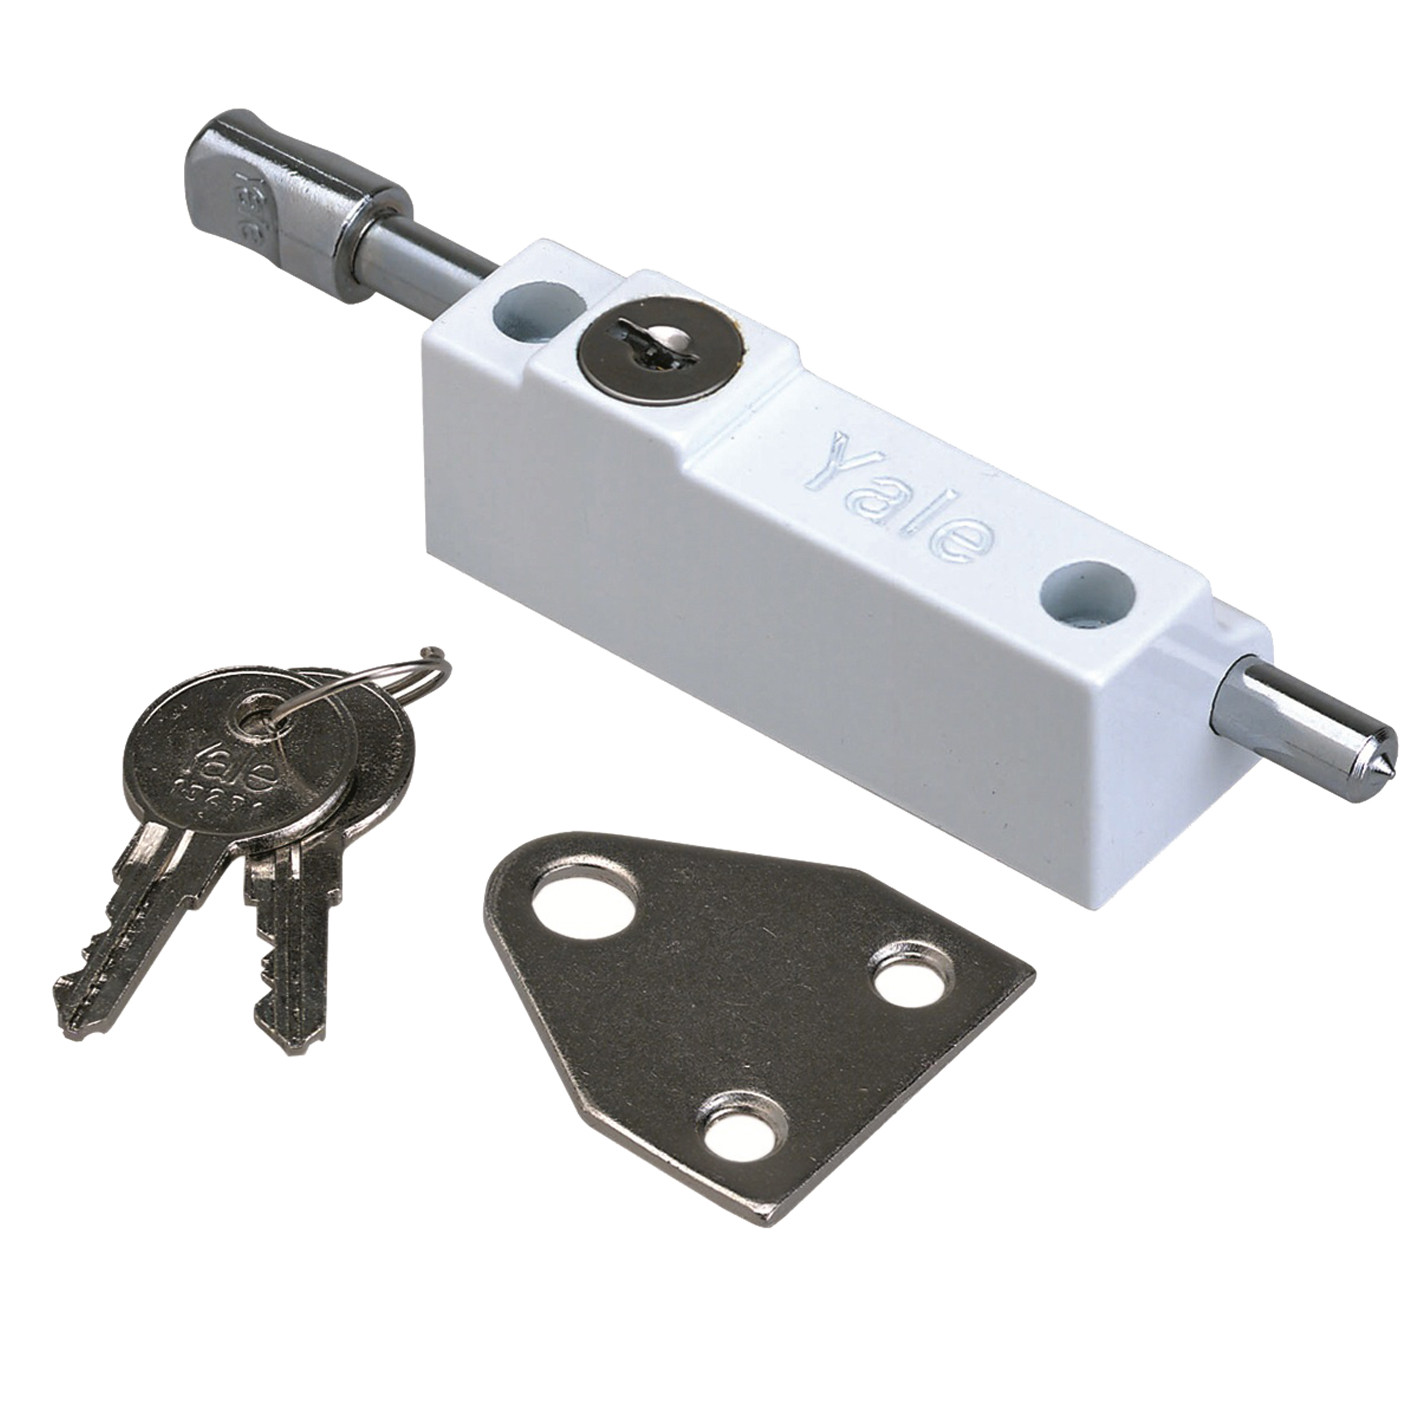 Best ideas about Patio Door Locks
. Save or Pin Yale P124 Patio Door Lock P 124 WE 1 lock & 2 keys Now.